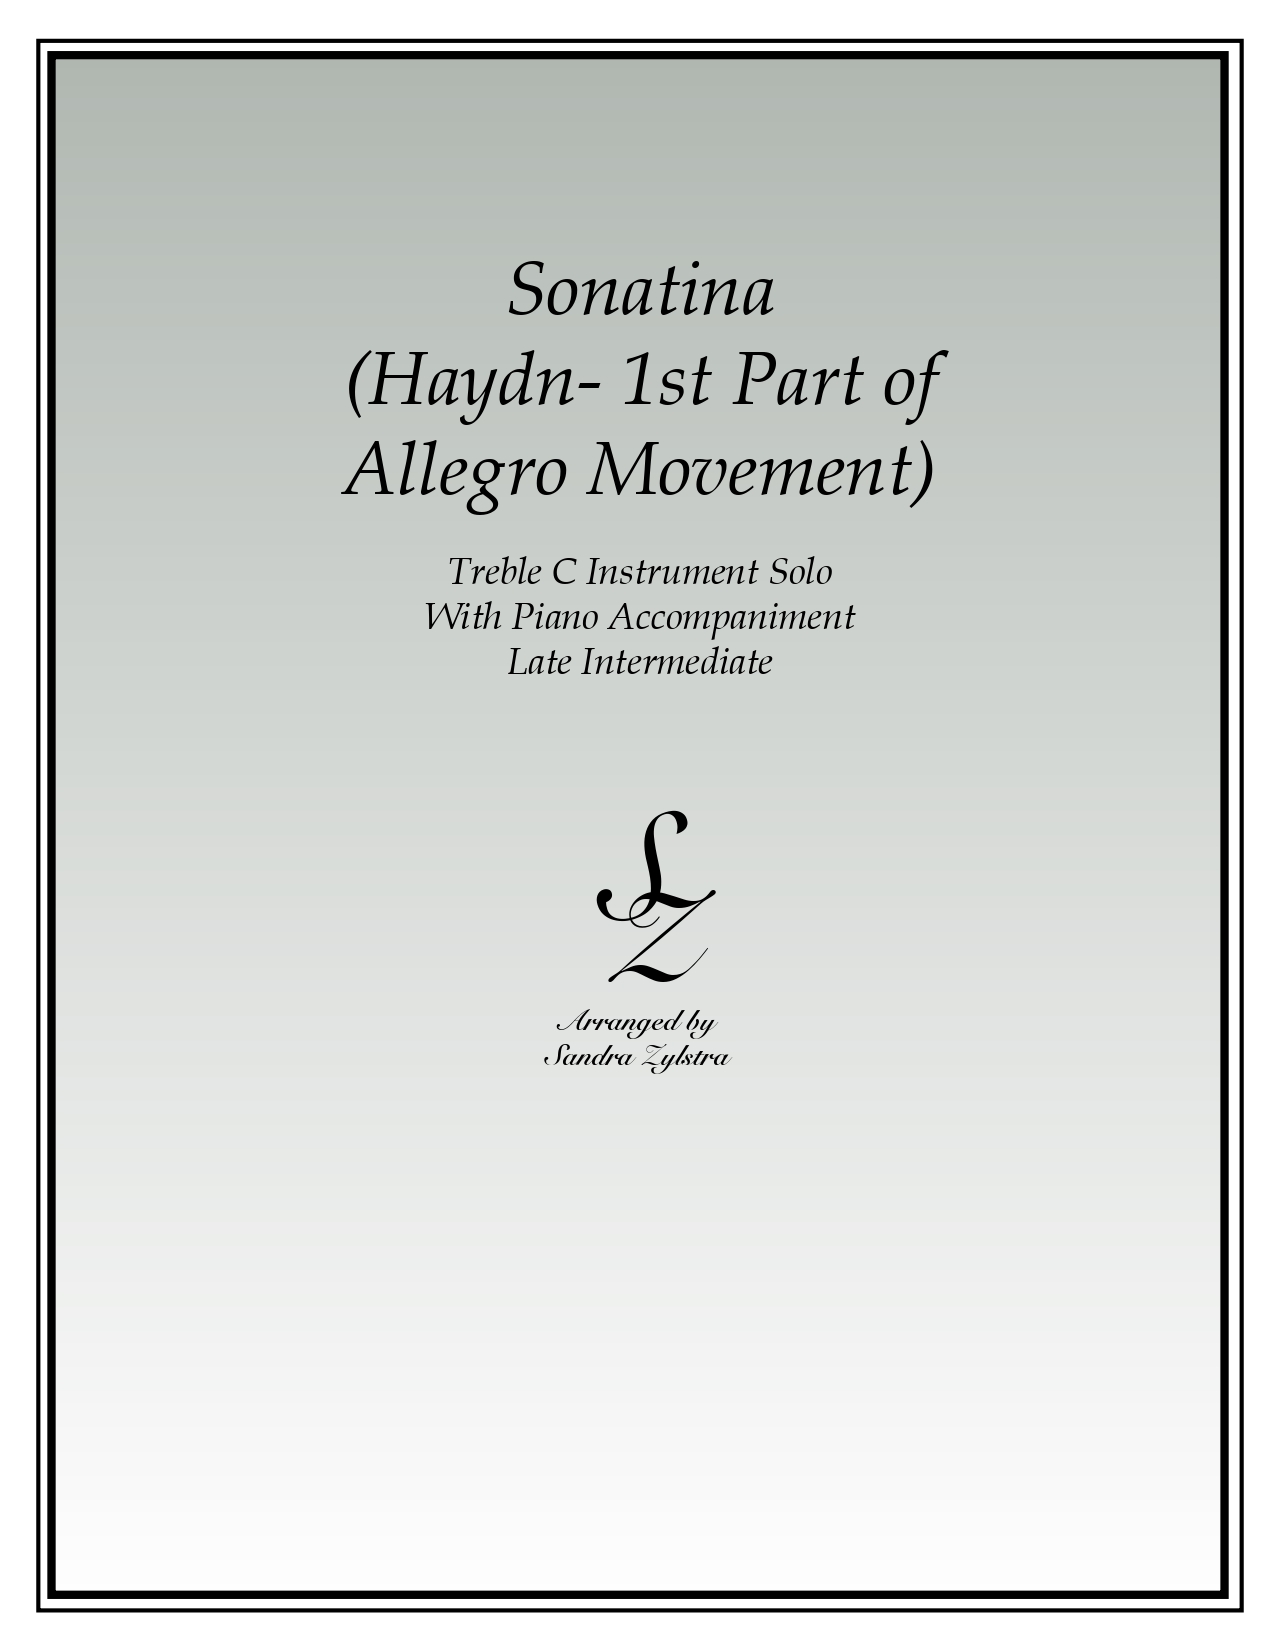 Sonatina Haydn treble C instrument solo part cover page 00011